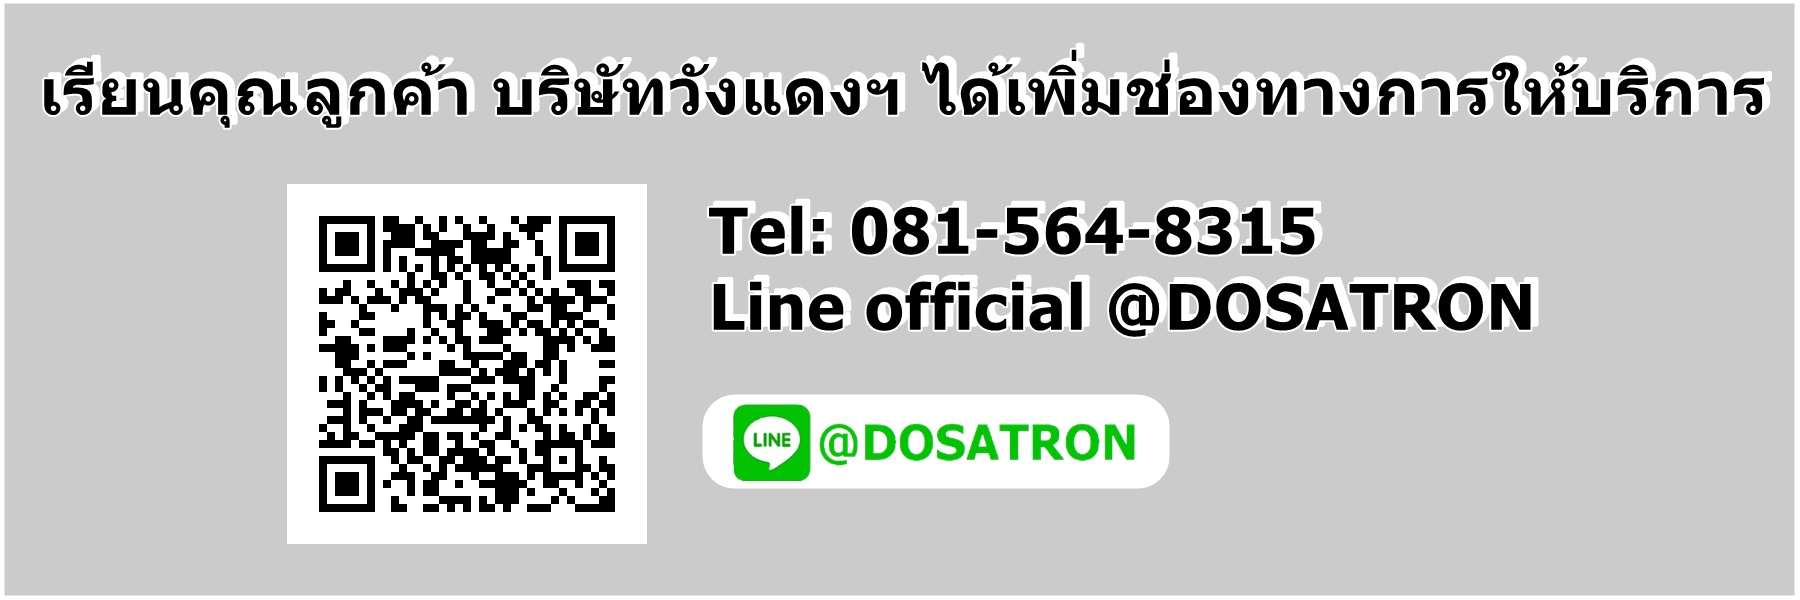 DOSATRON THAILAND